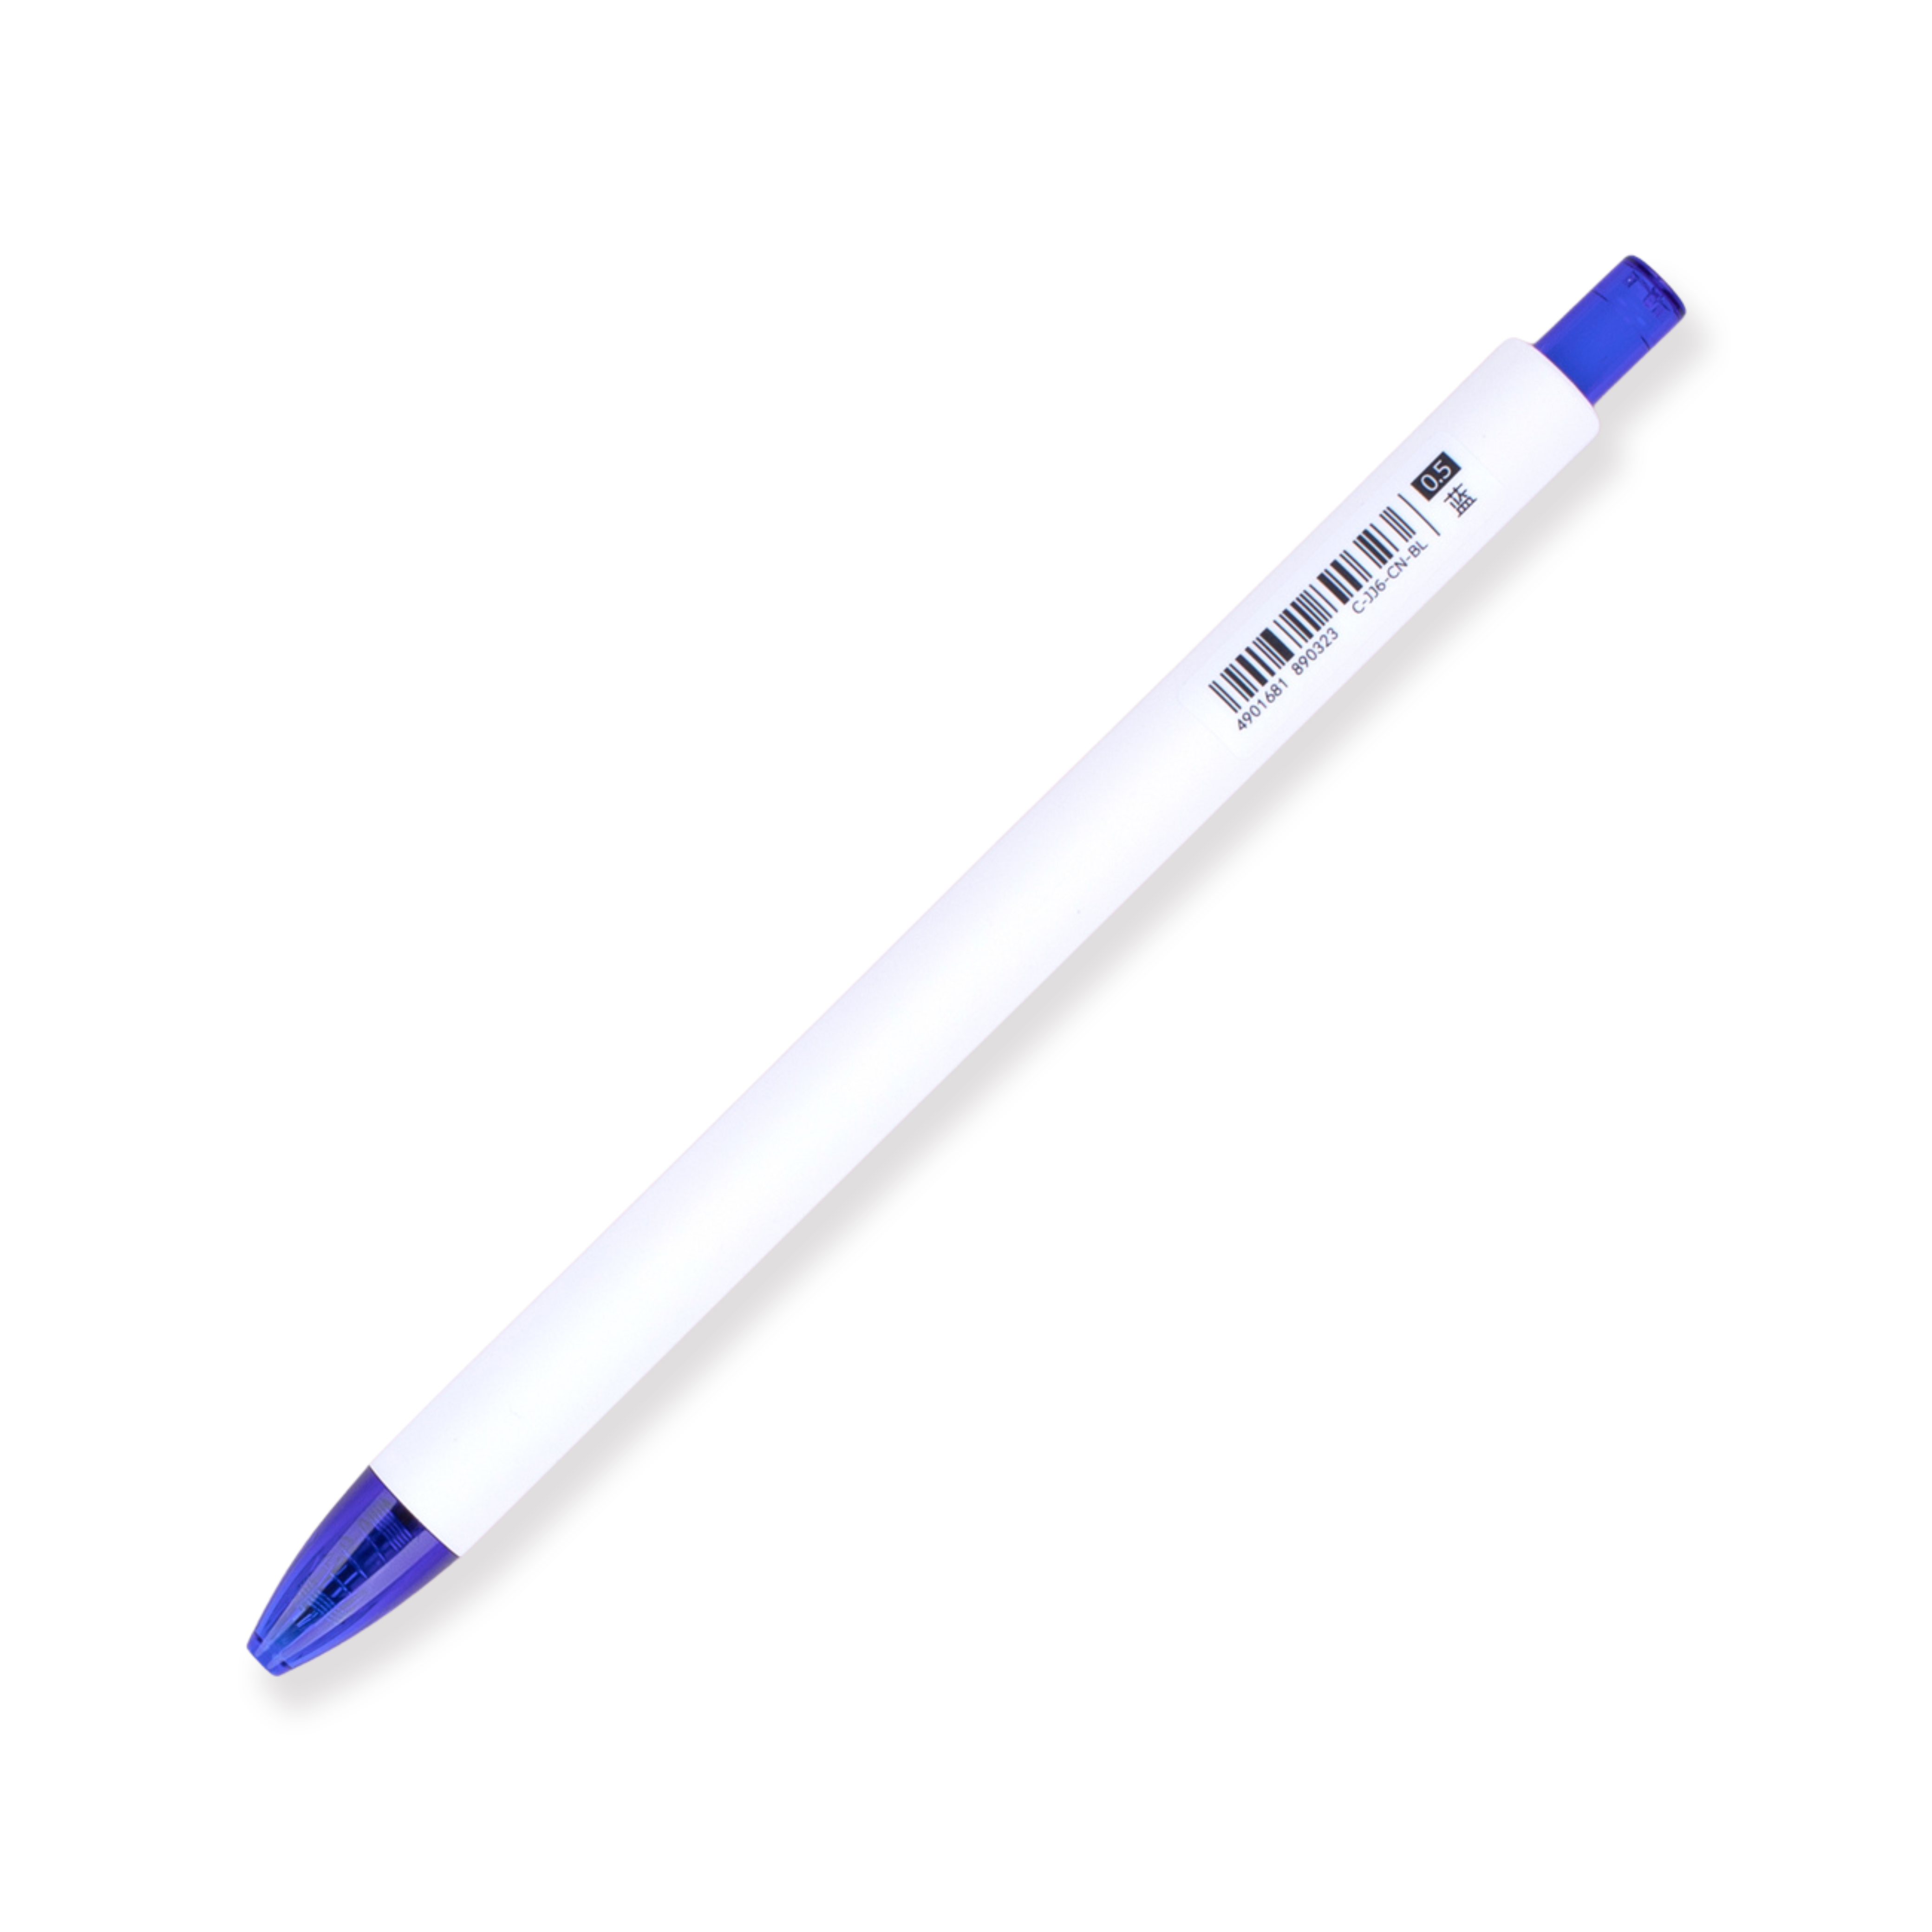 Zebra Rainbow Retractable Gel Pen 0.5mm - Blue - Stationery Pal